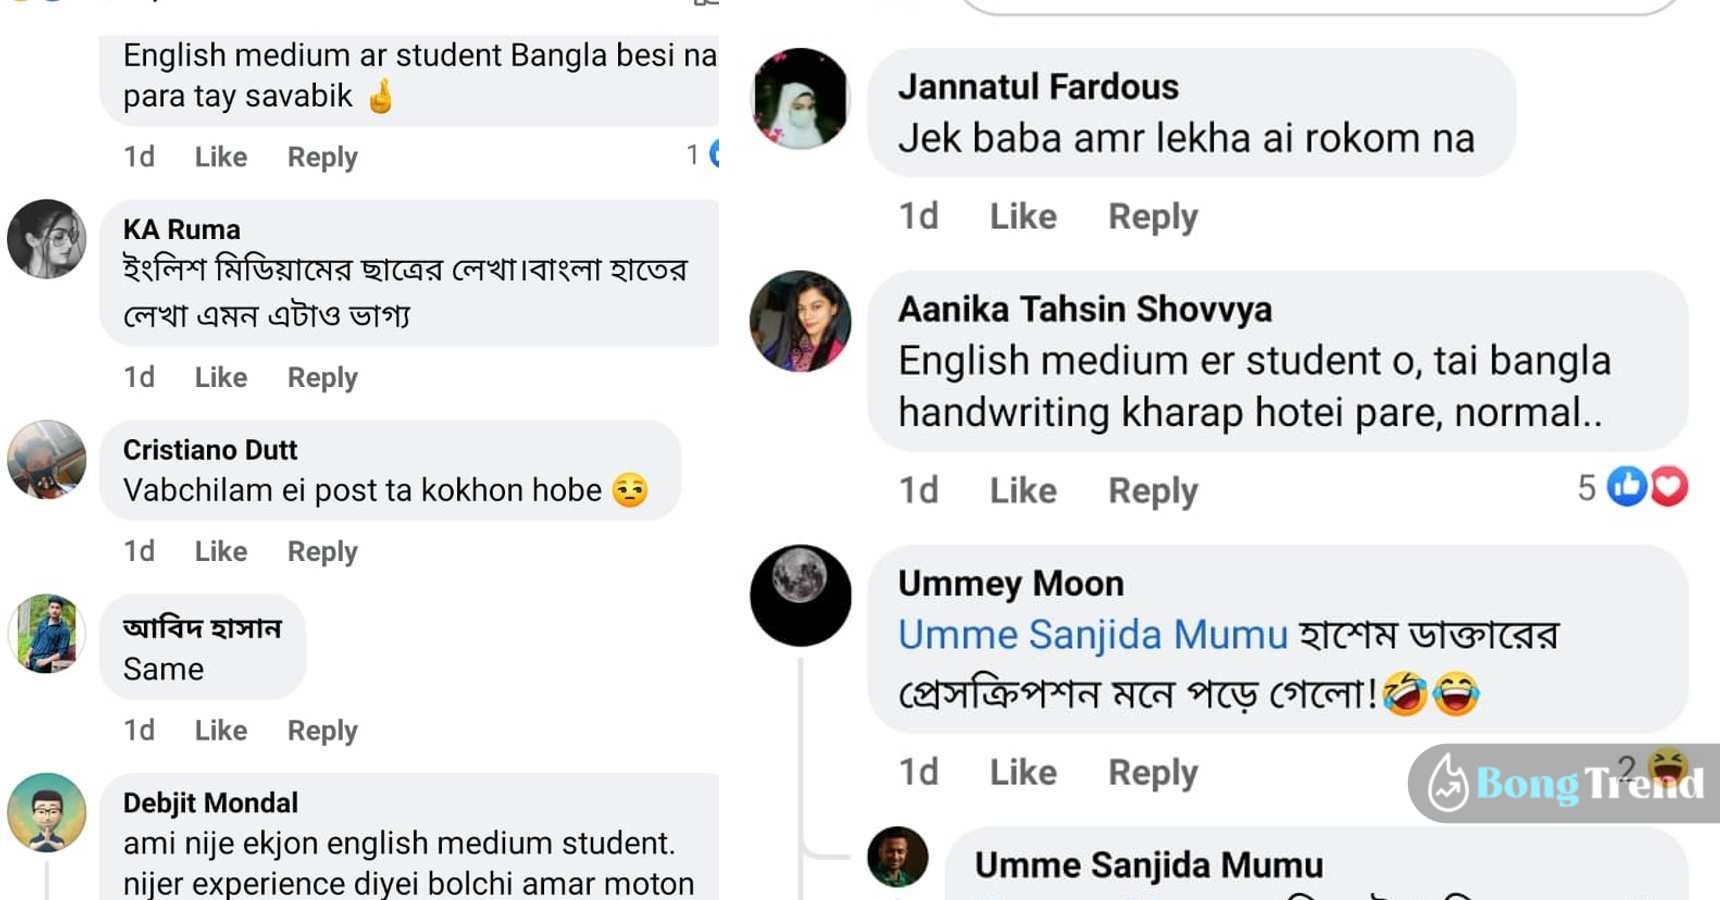 Mithai actor Sid bad handwritting trolled on social media